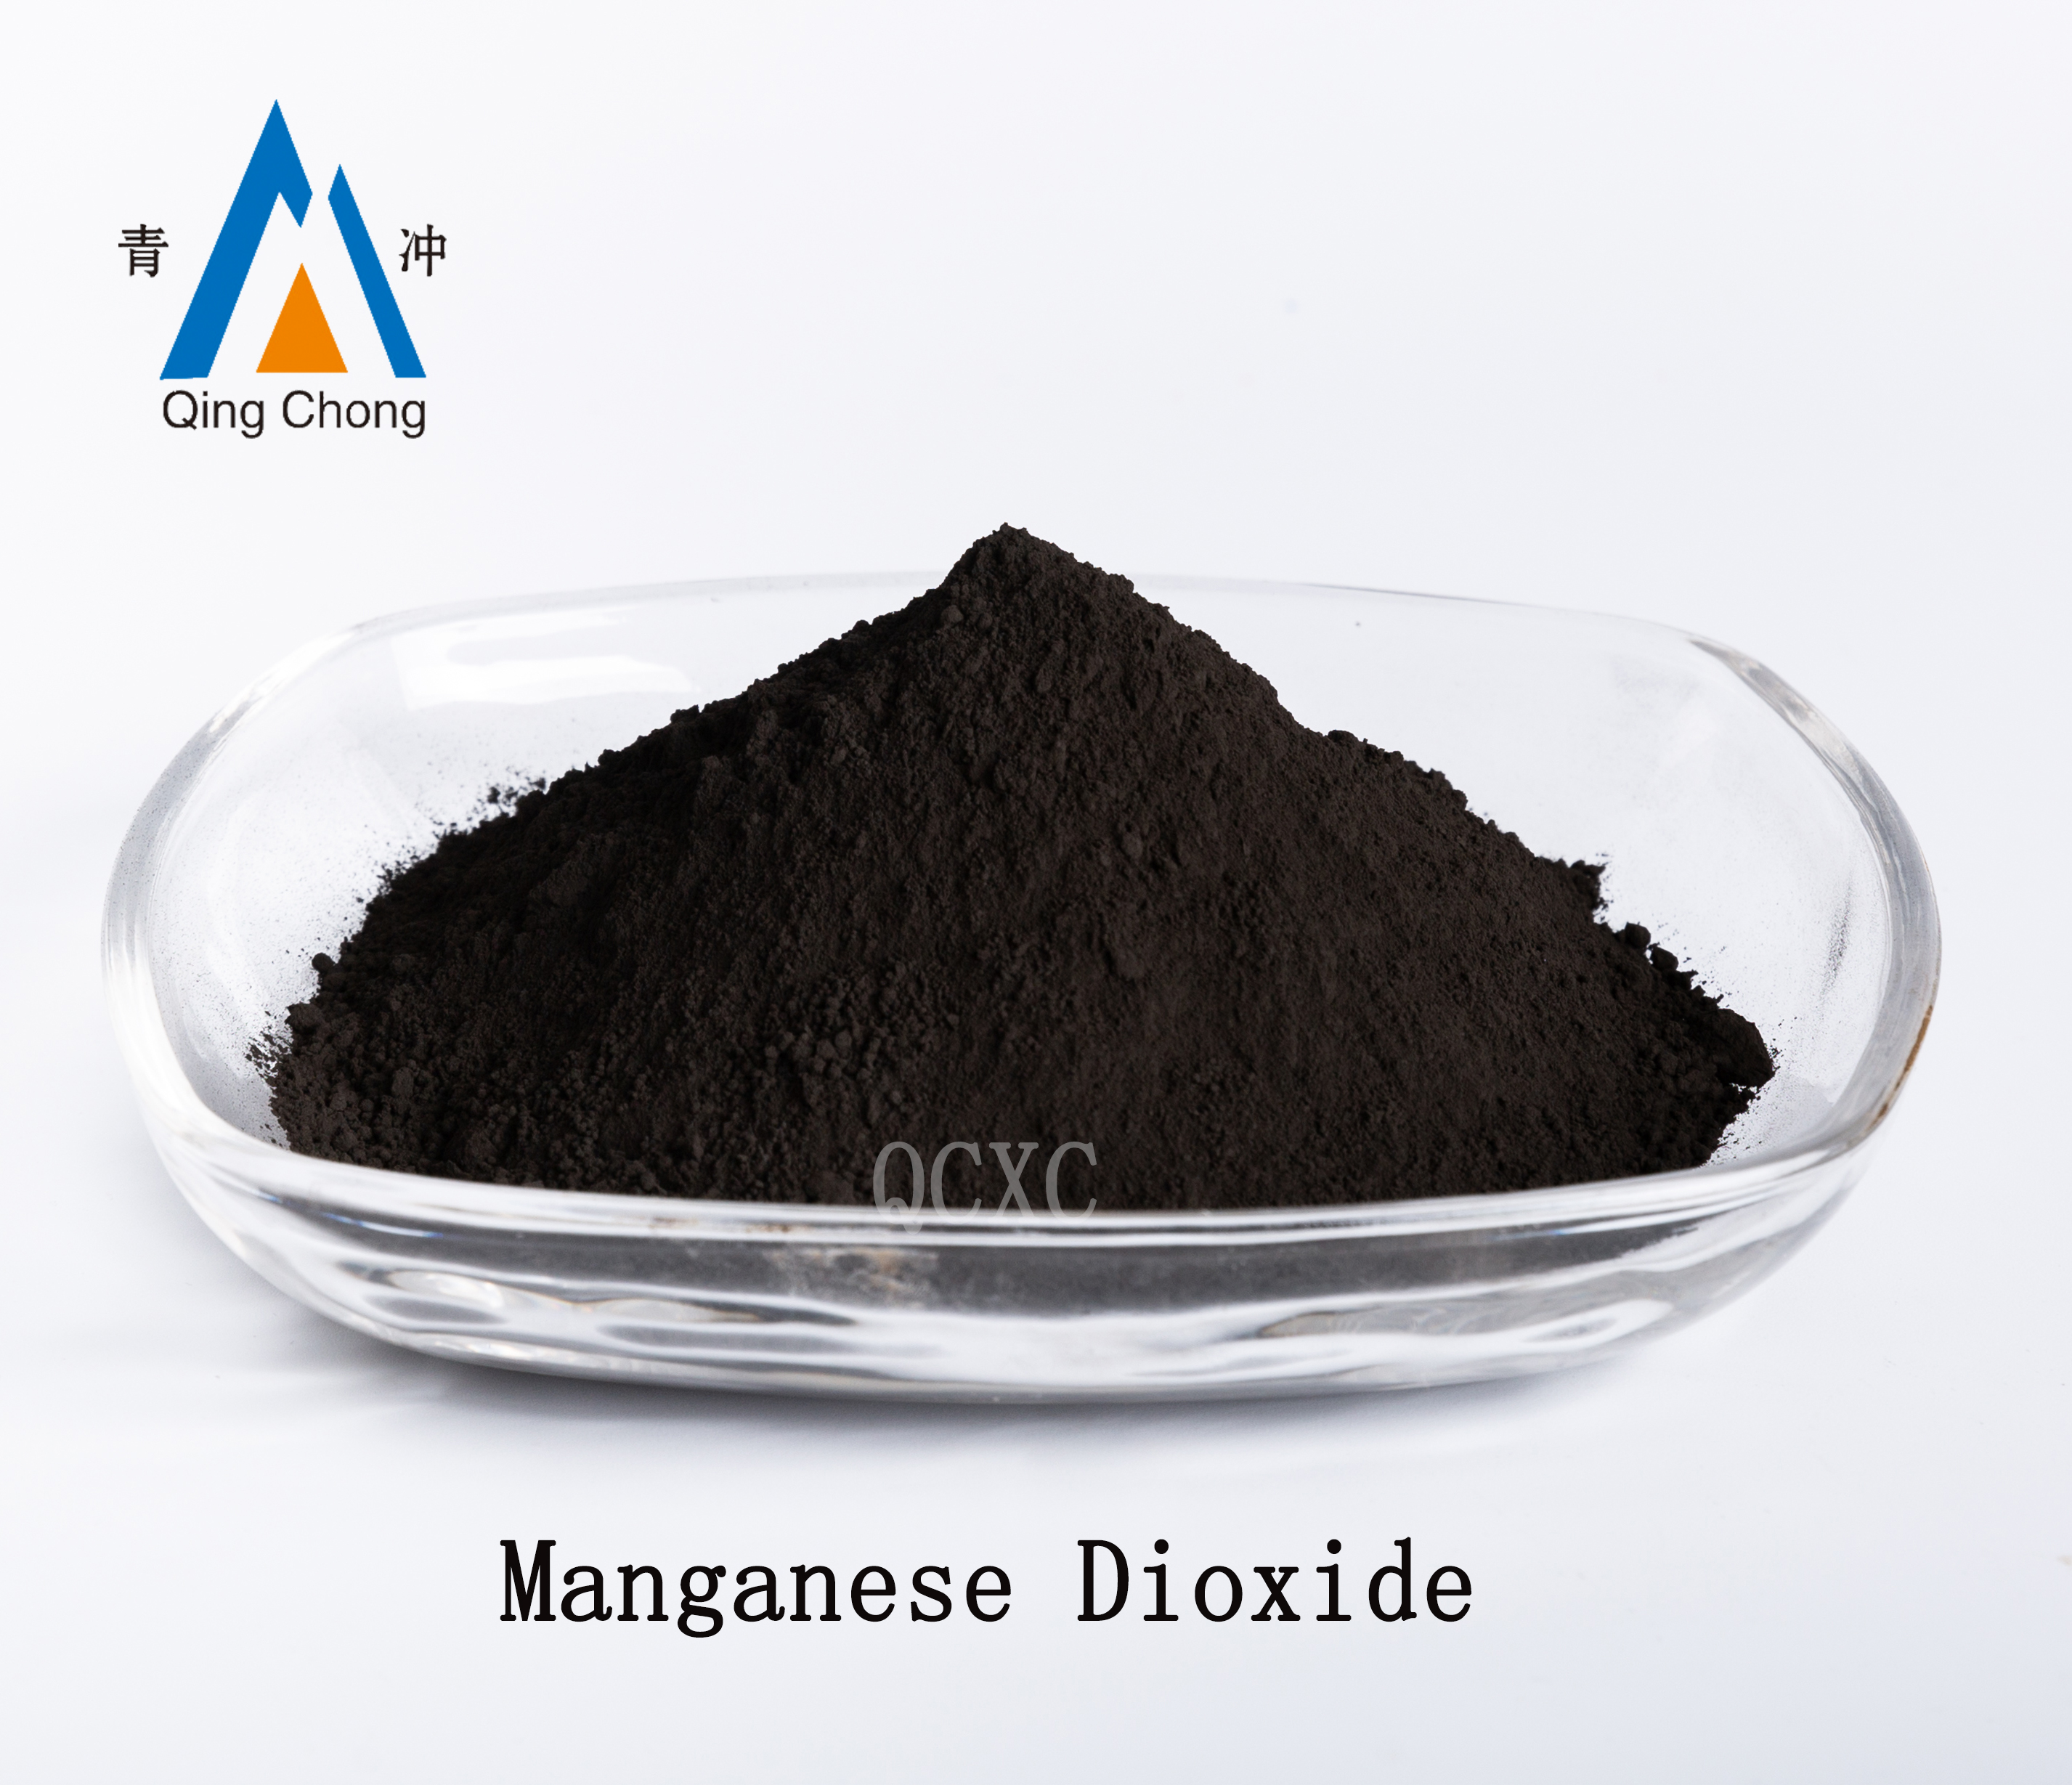 The Usage of manganese dioxide